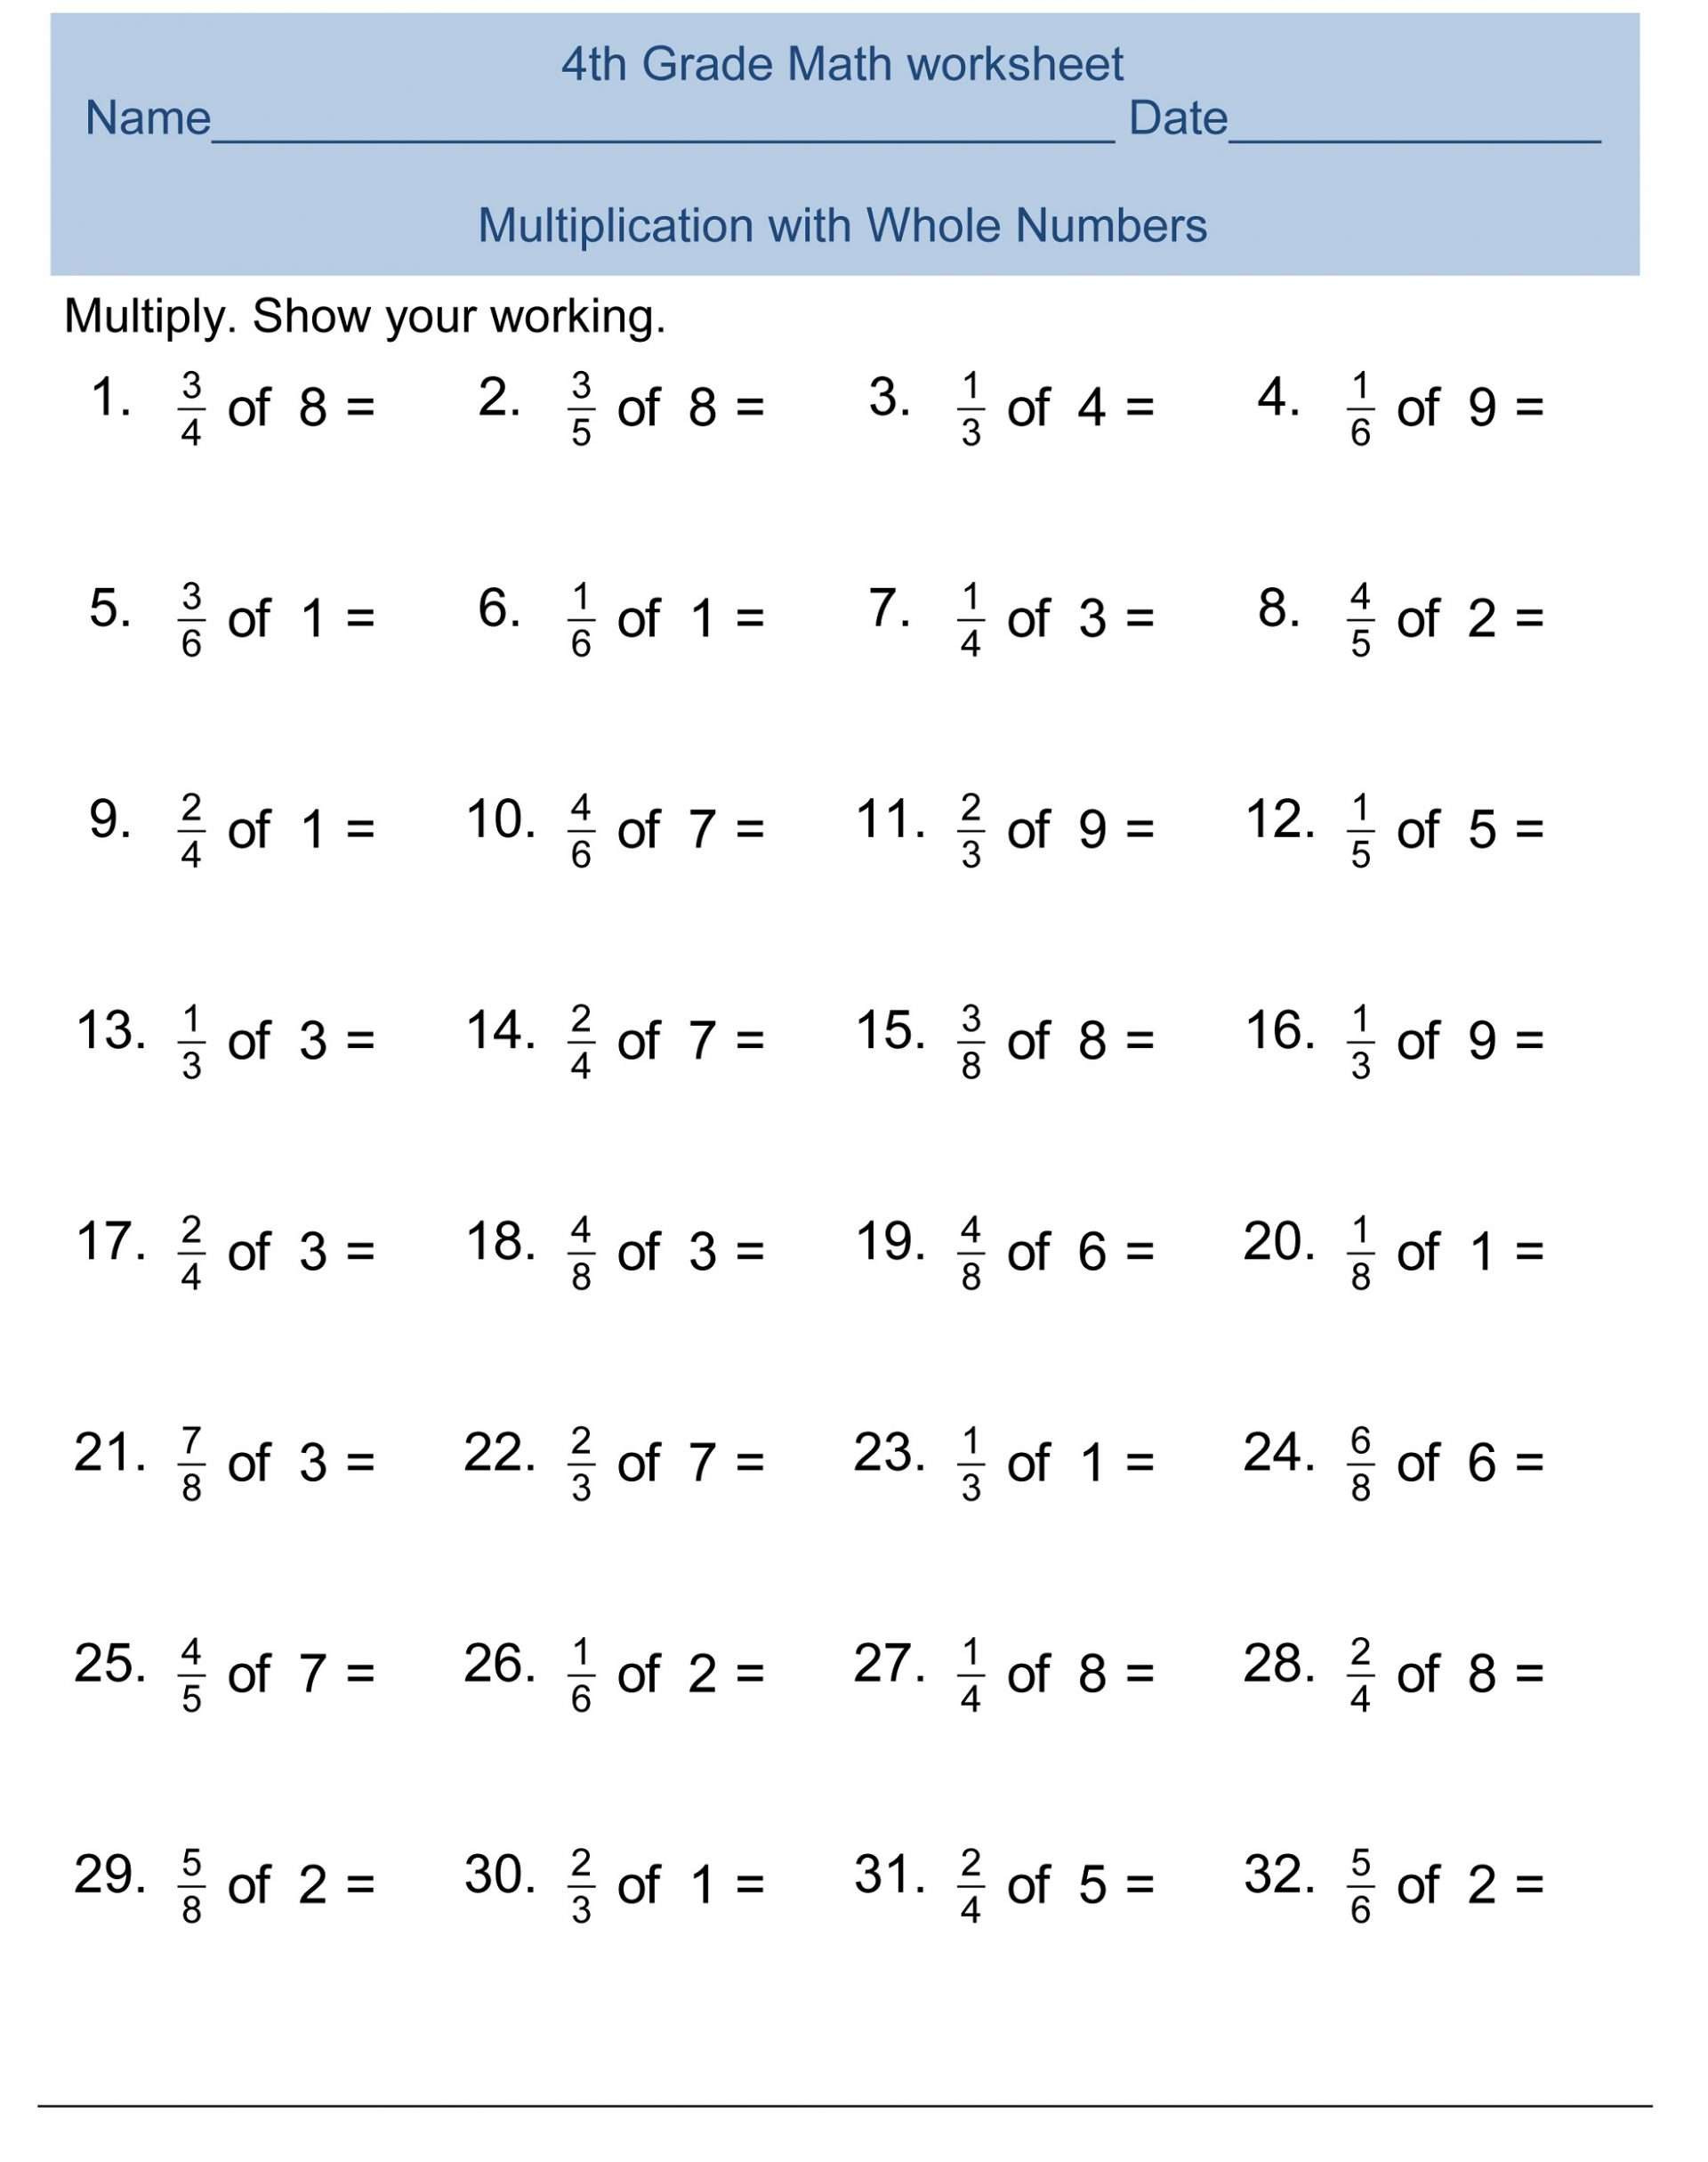 Free Printable 4th Grade Math Fraction Worksheets